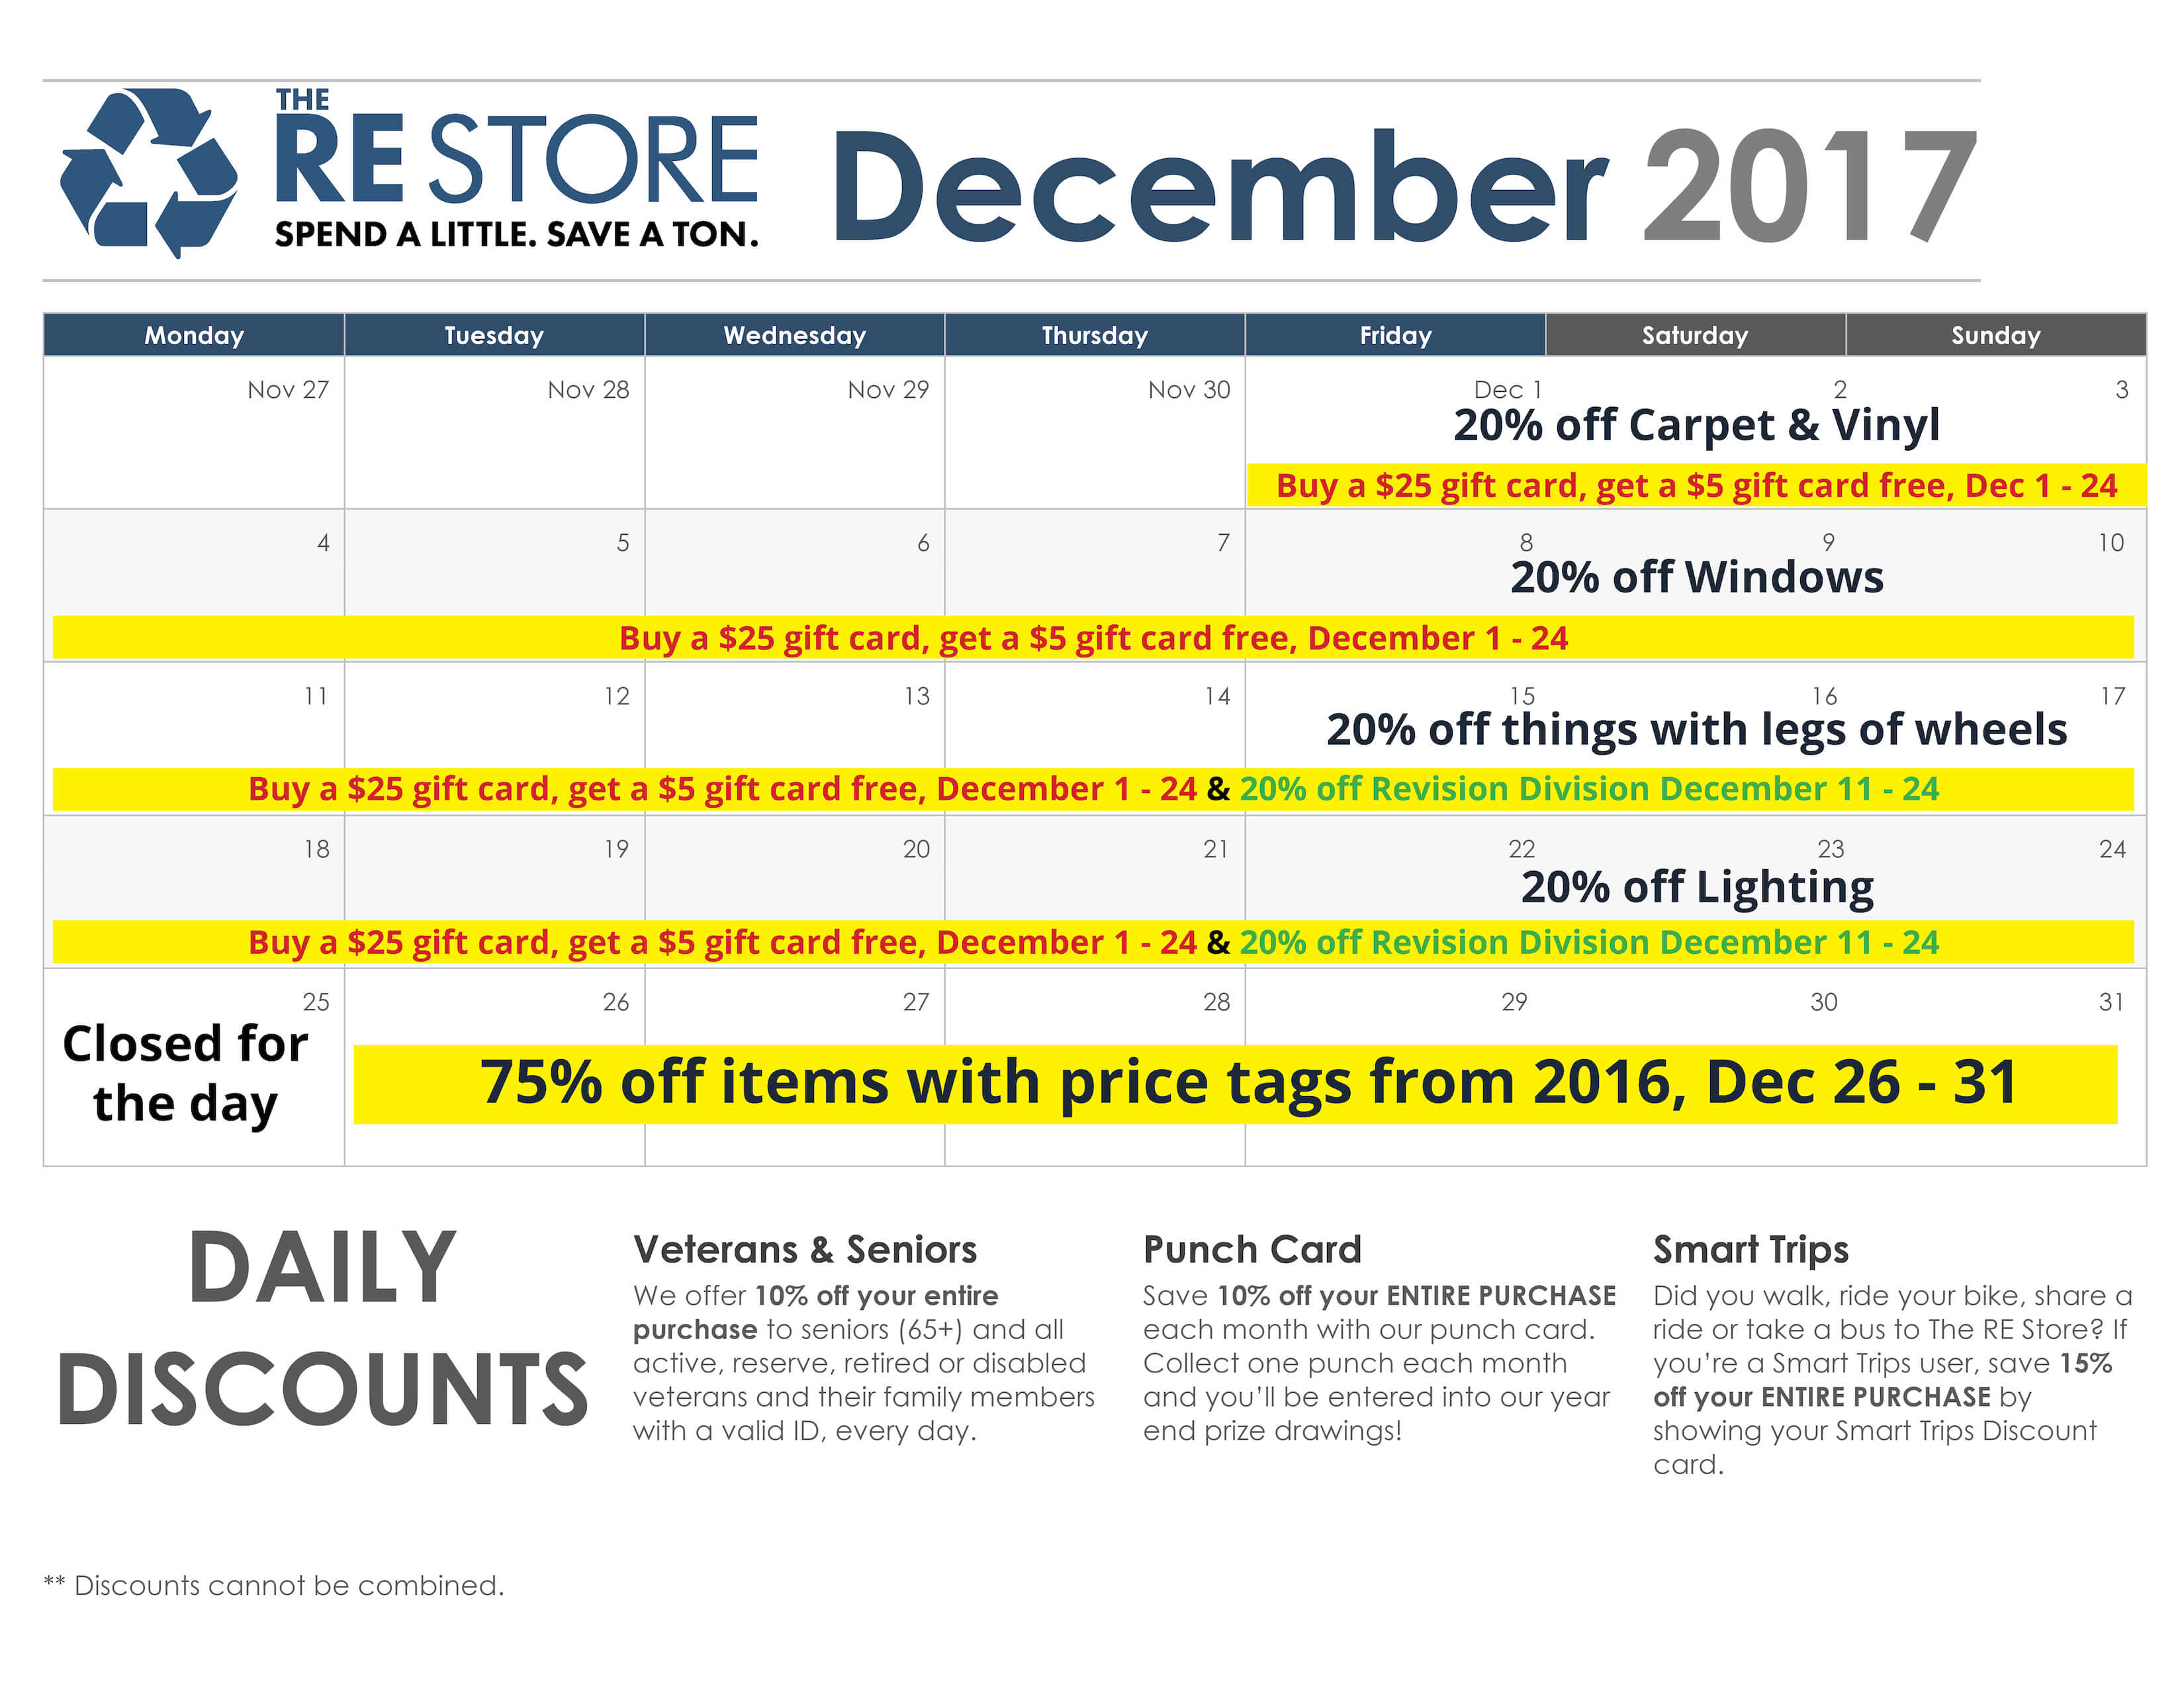 Calendar showing RE Store sales for December 2017